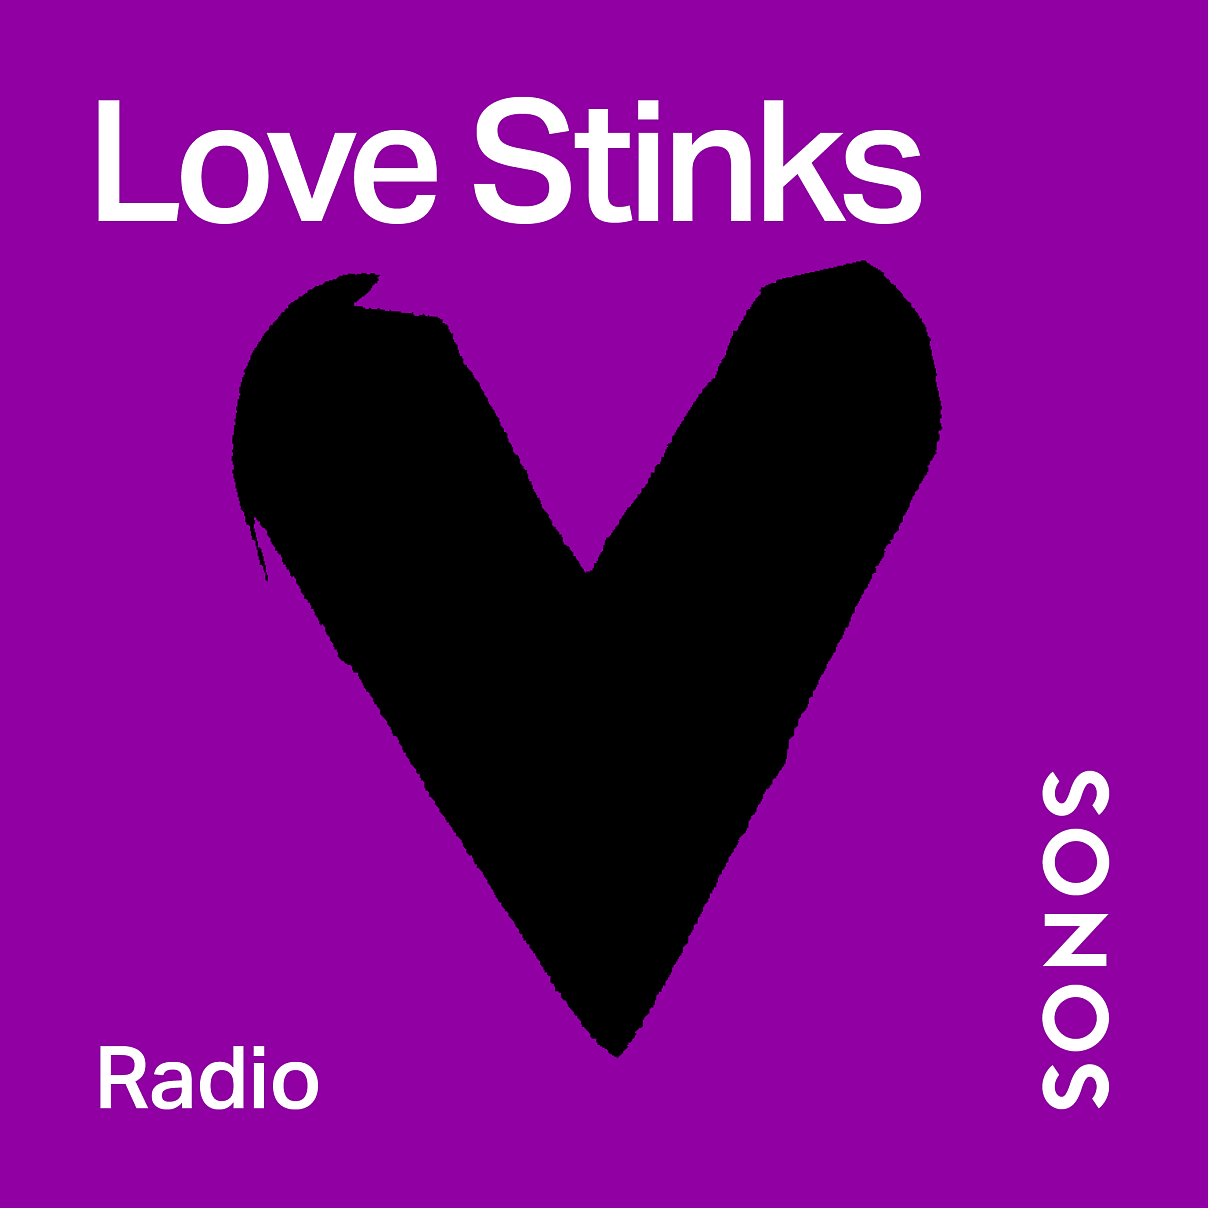 Sonos Radio Station: Love Stinks